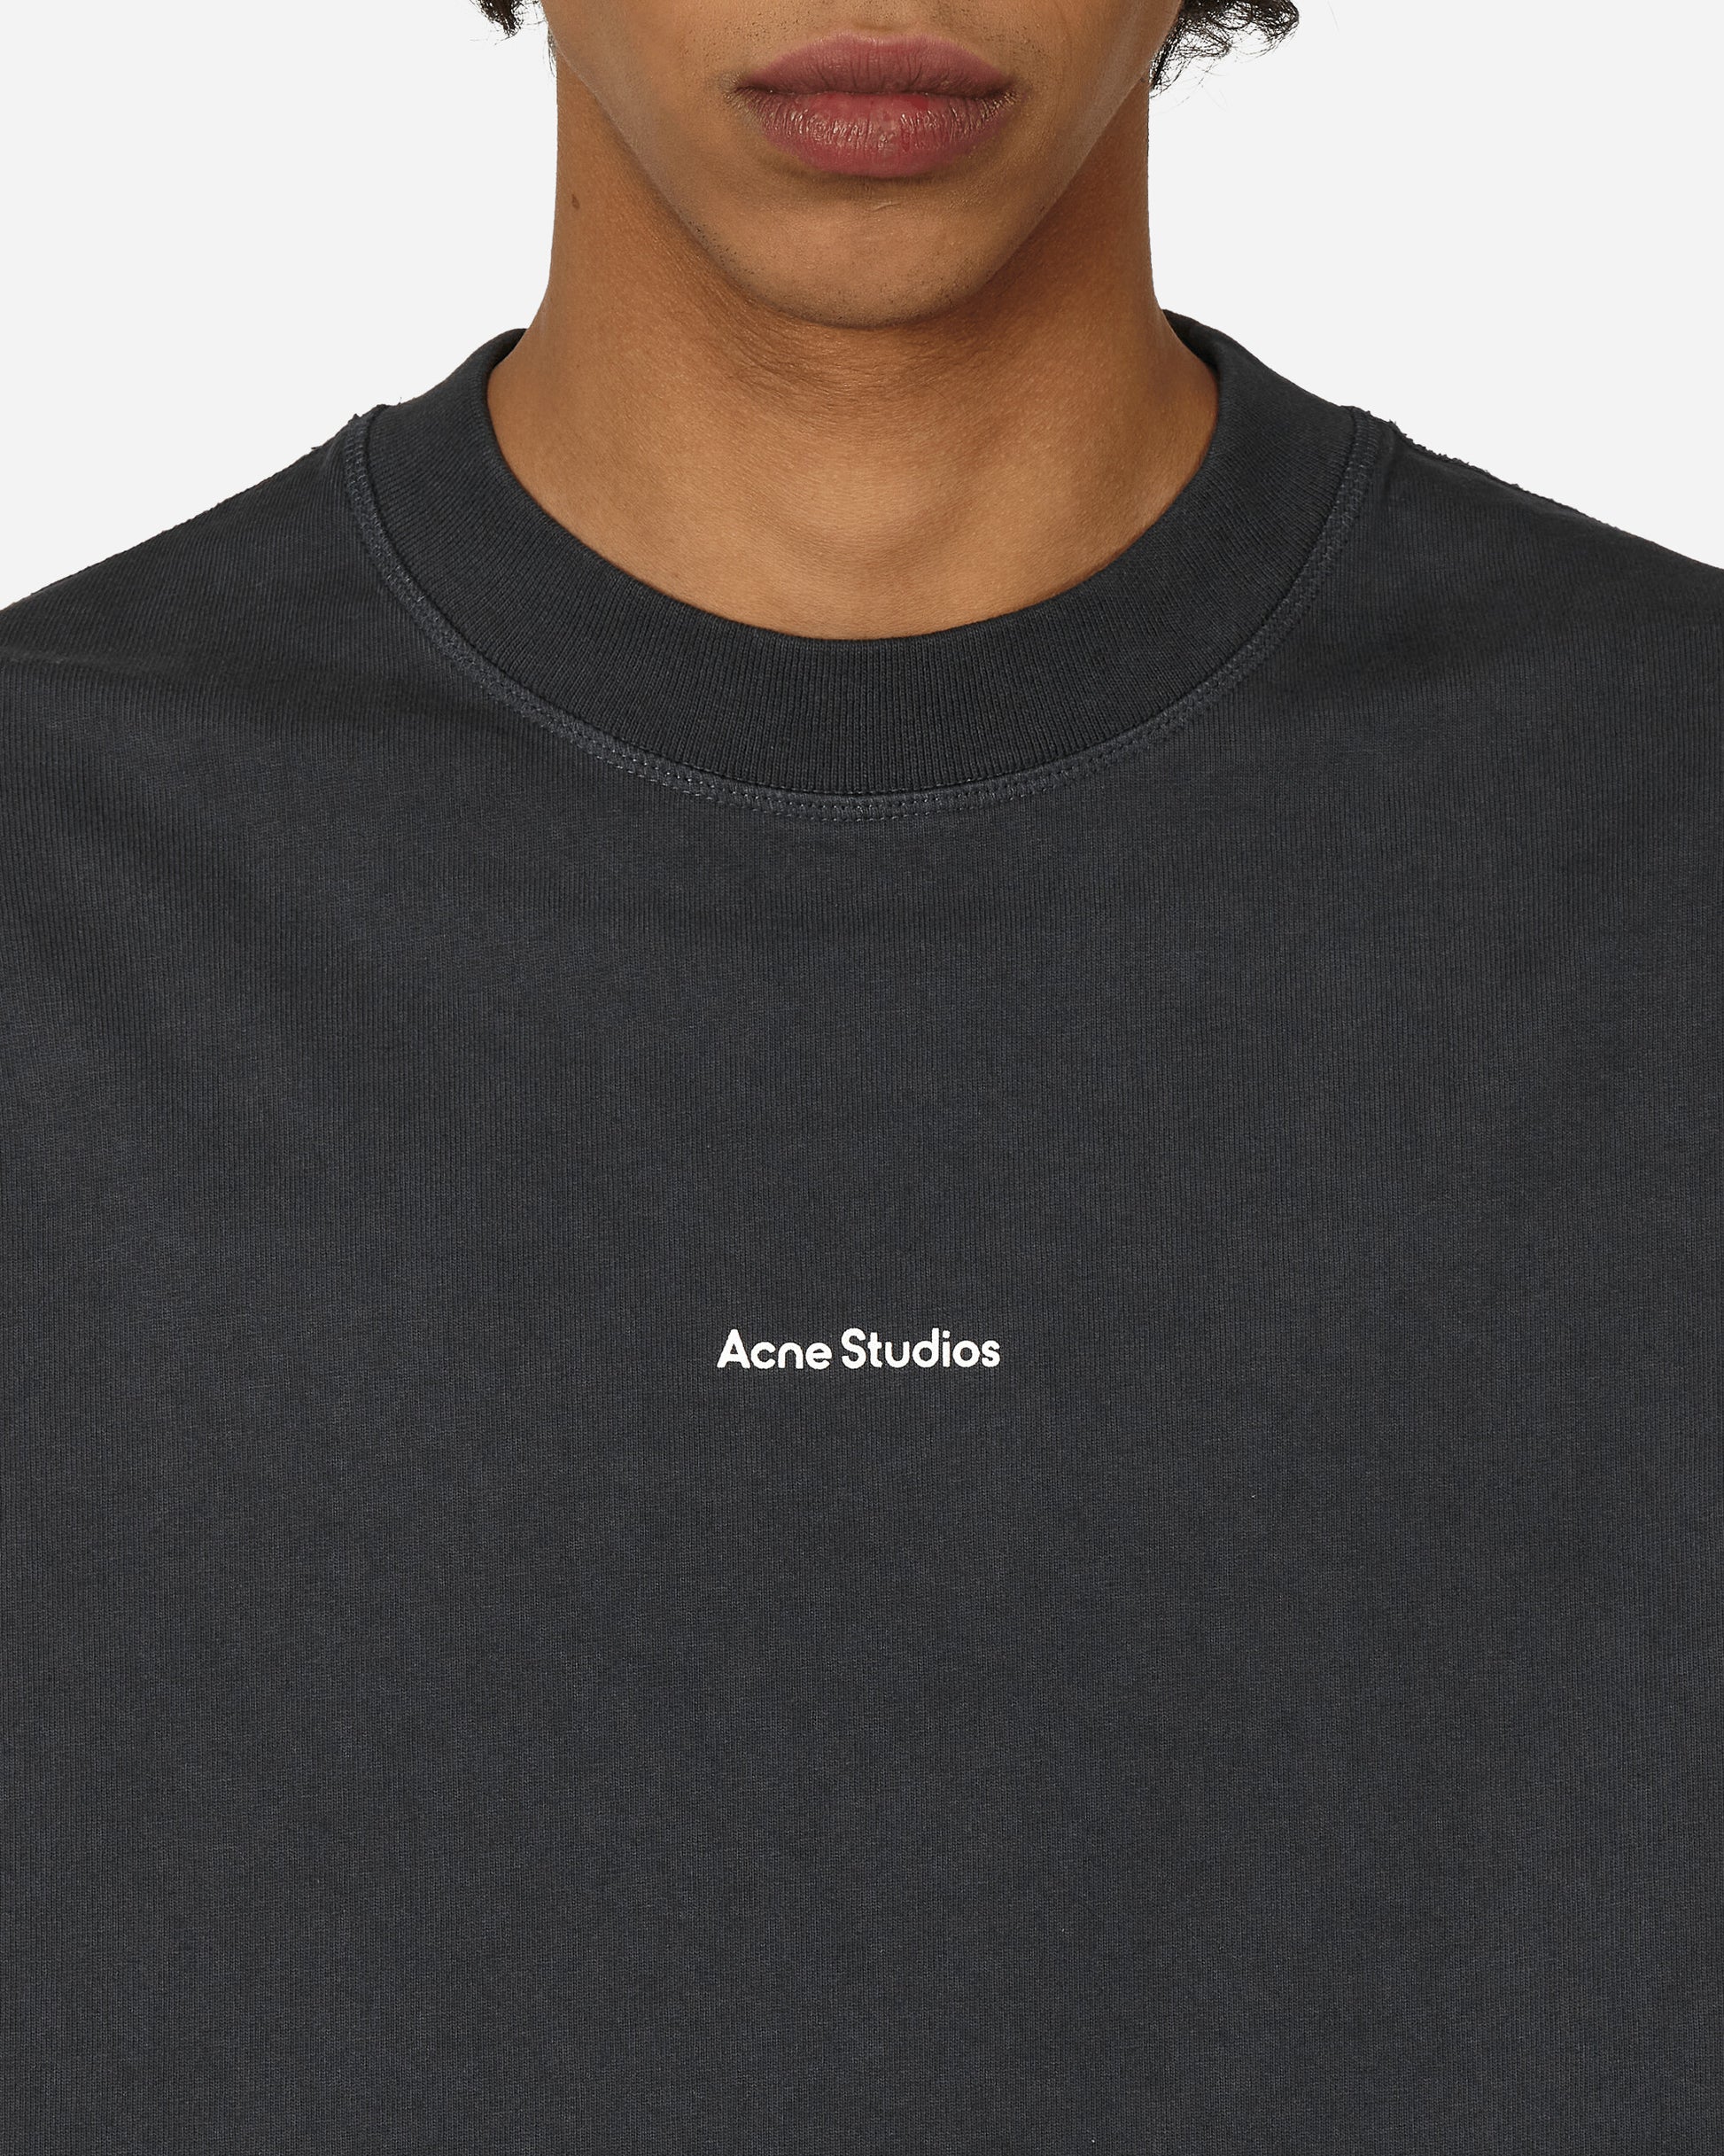 Acne Studios Short Sleeve T-Shirt Black T-Shirts Shortsleeve BL0278- 900